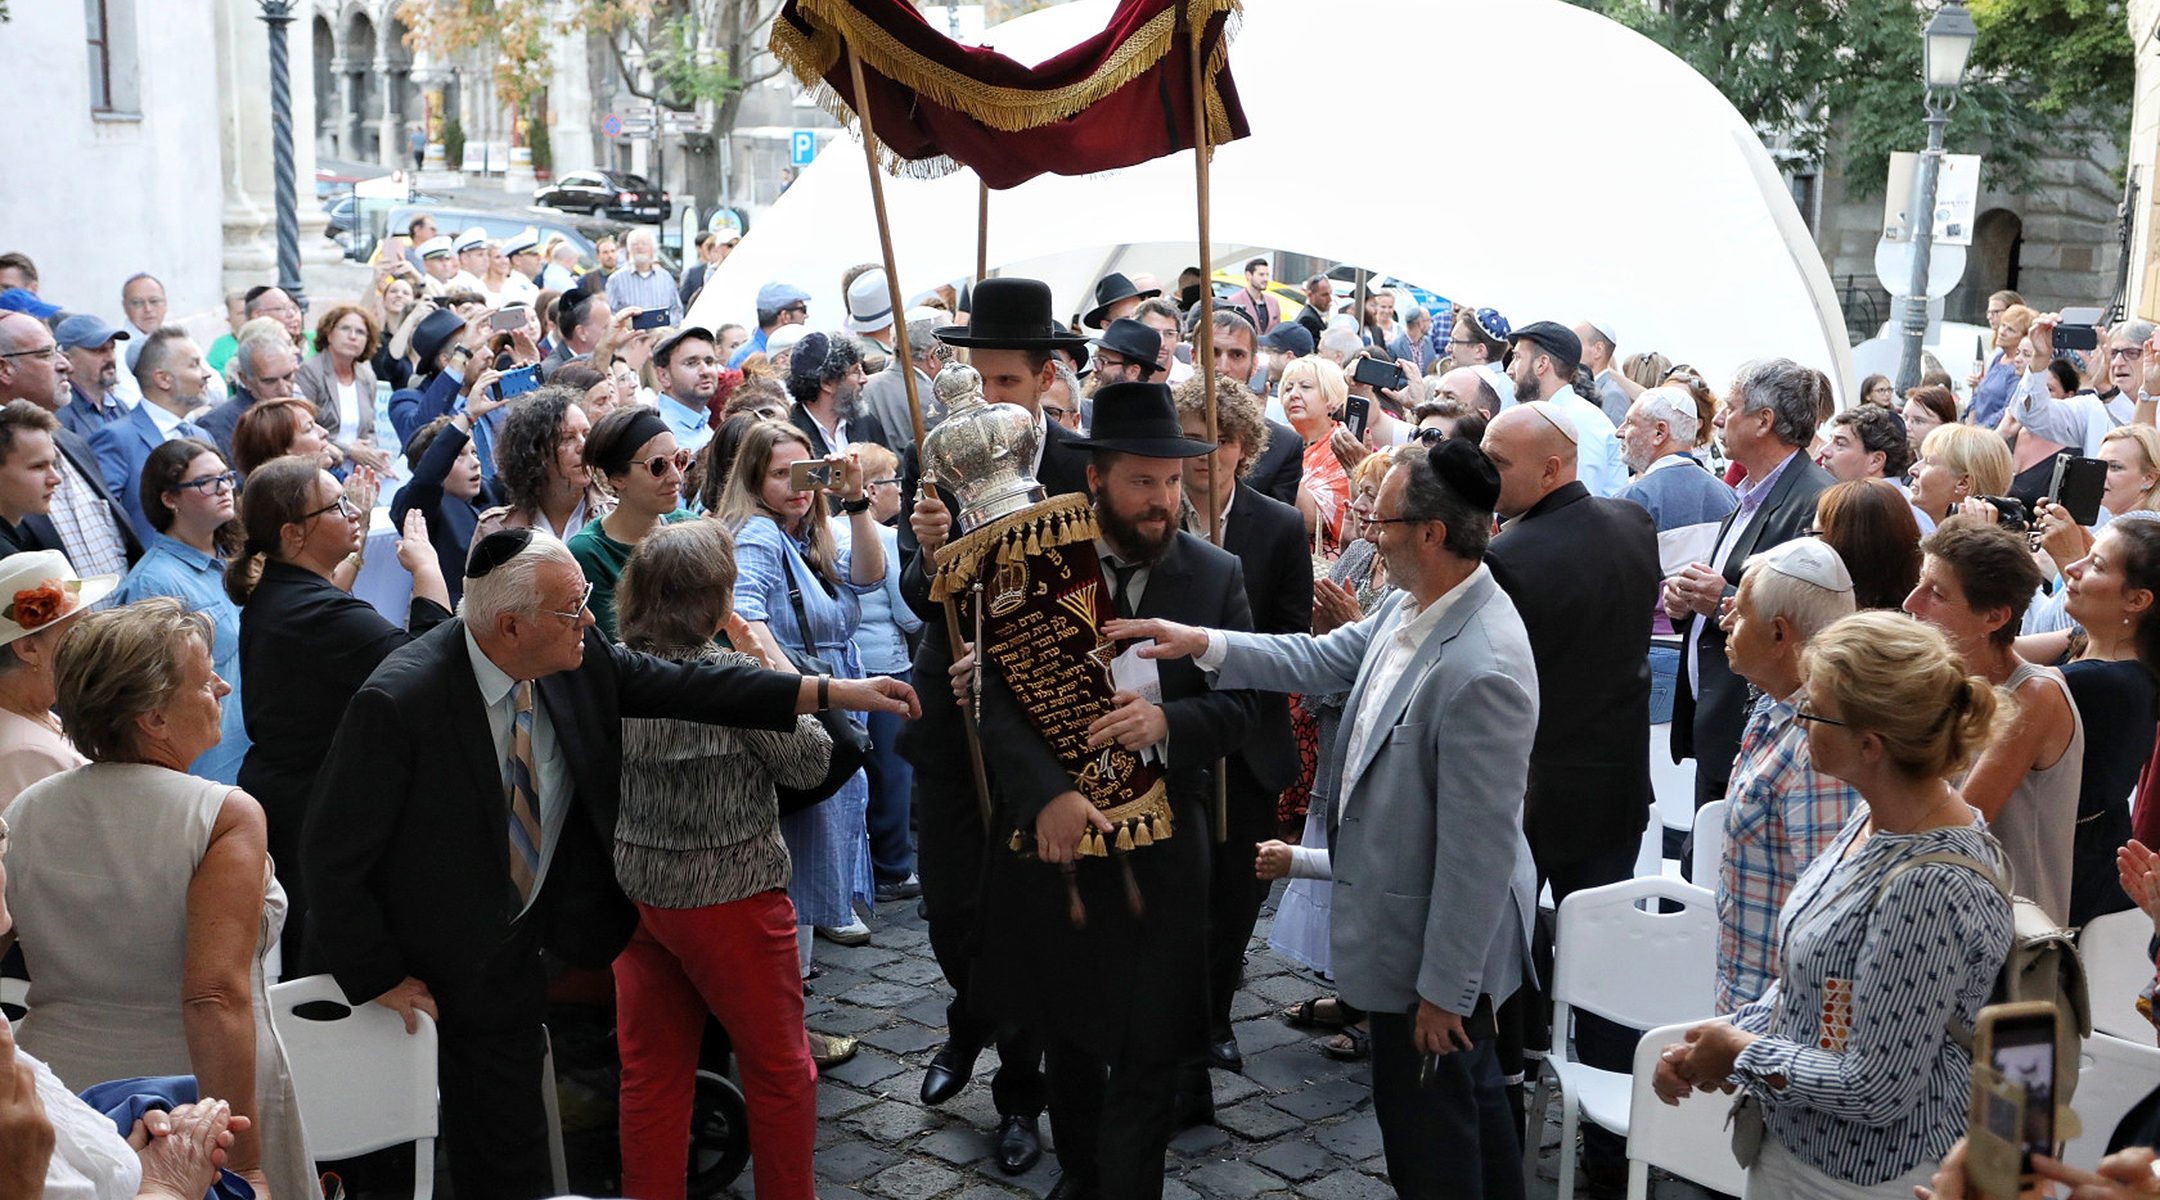 Rabbi Asher Faith carrying a Torah scroll into the the Buda Castle Synagogue in Budapest, Hungary of Sept. 6, 2018. (Márton Merész)